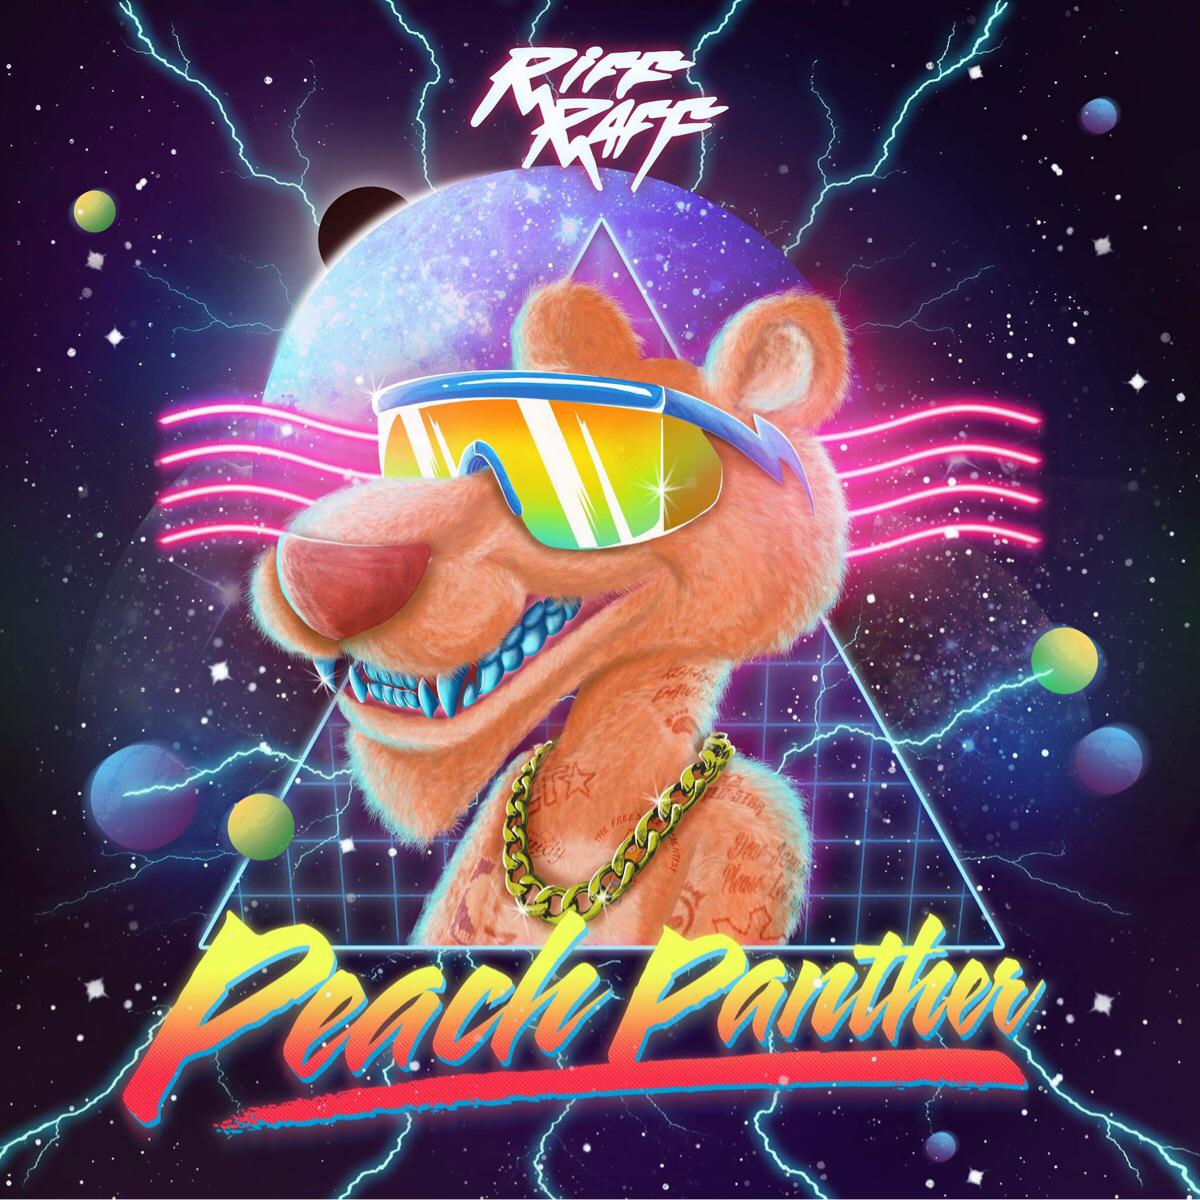 DatPiff Raff​ 's Peach Panther Artwork